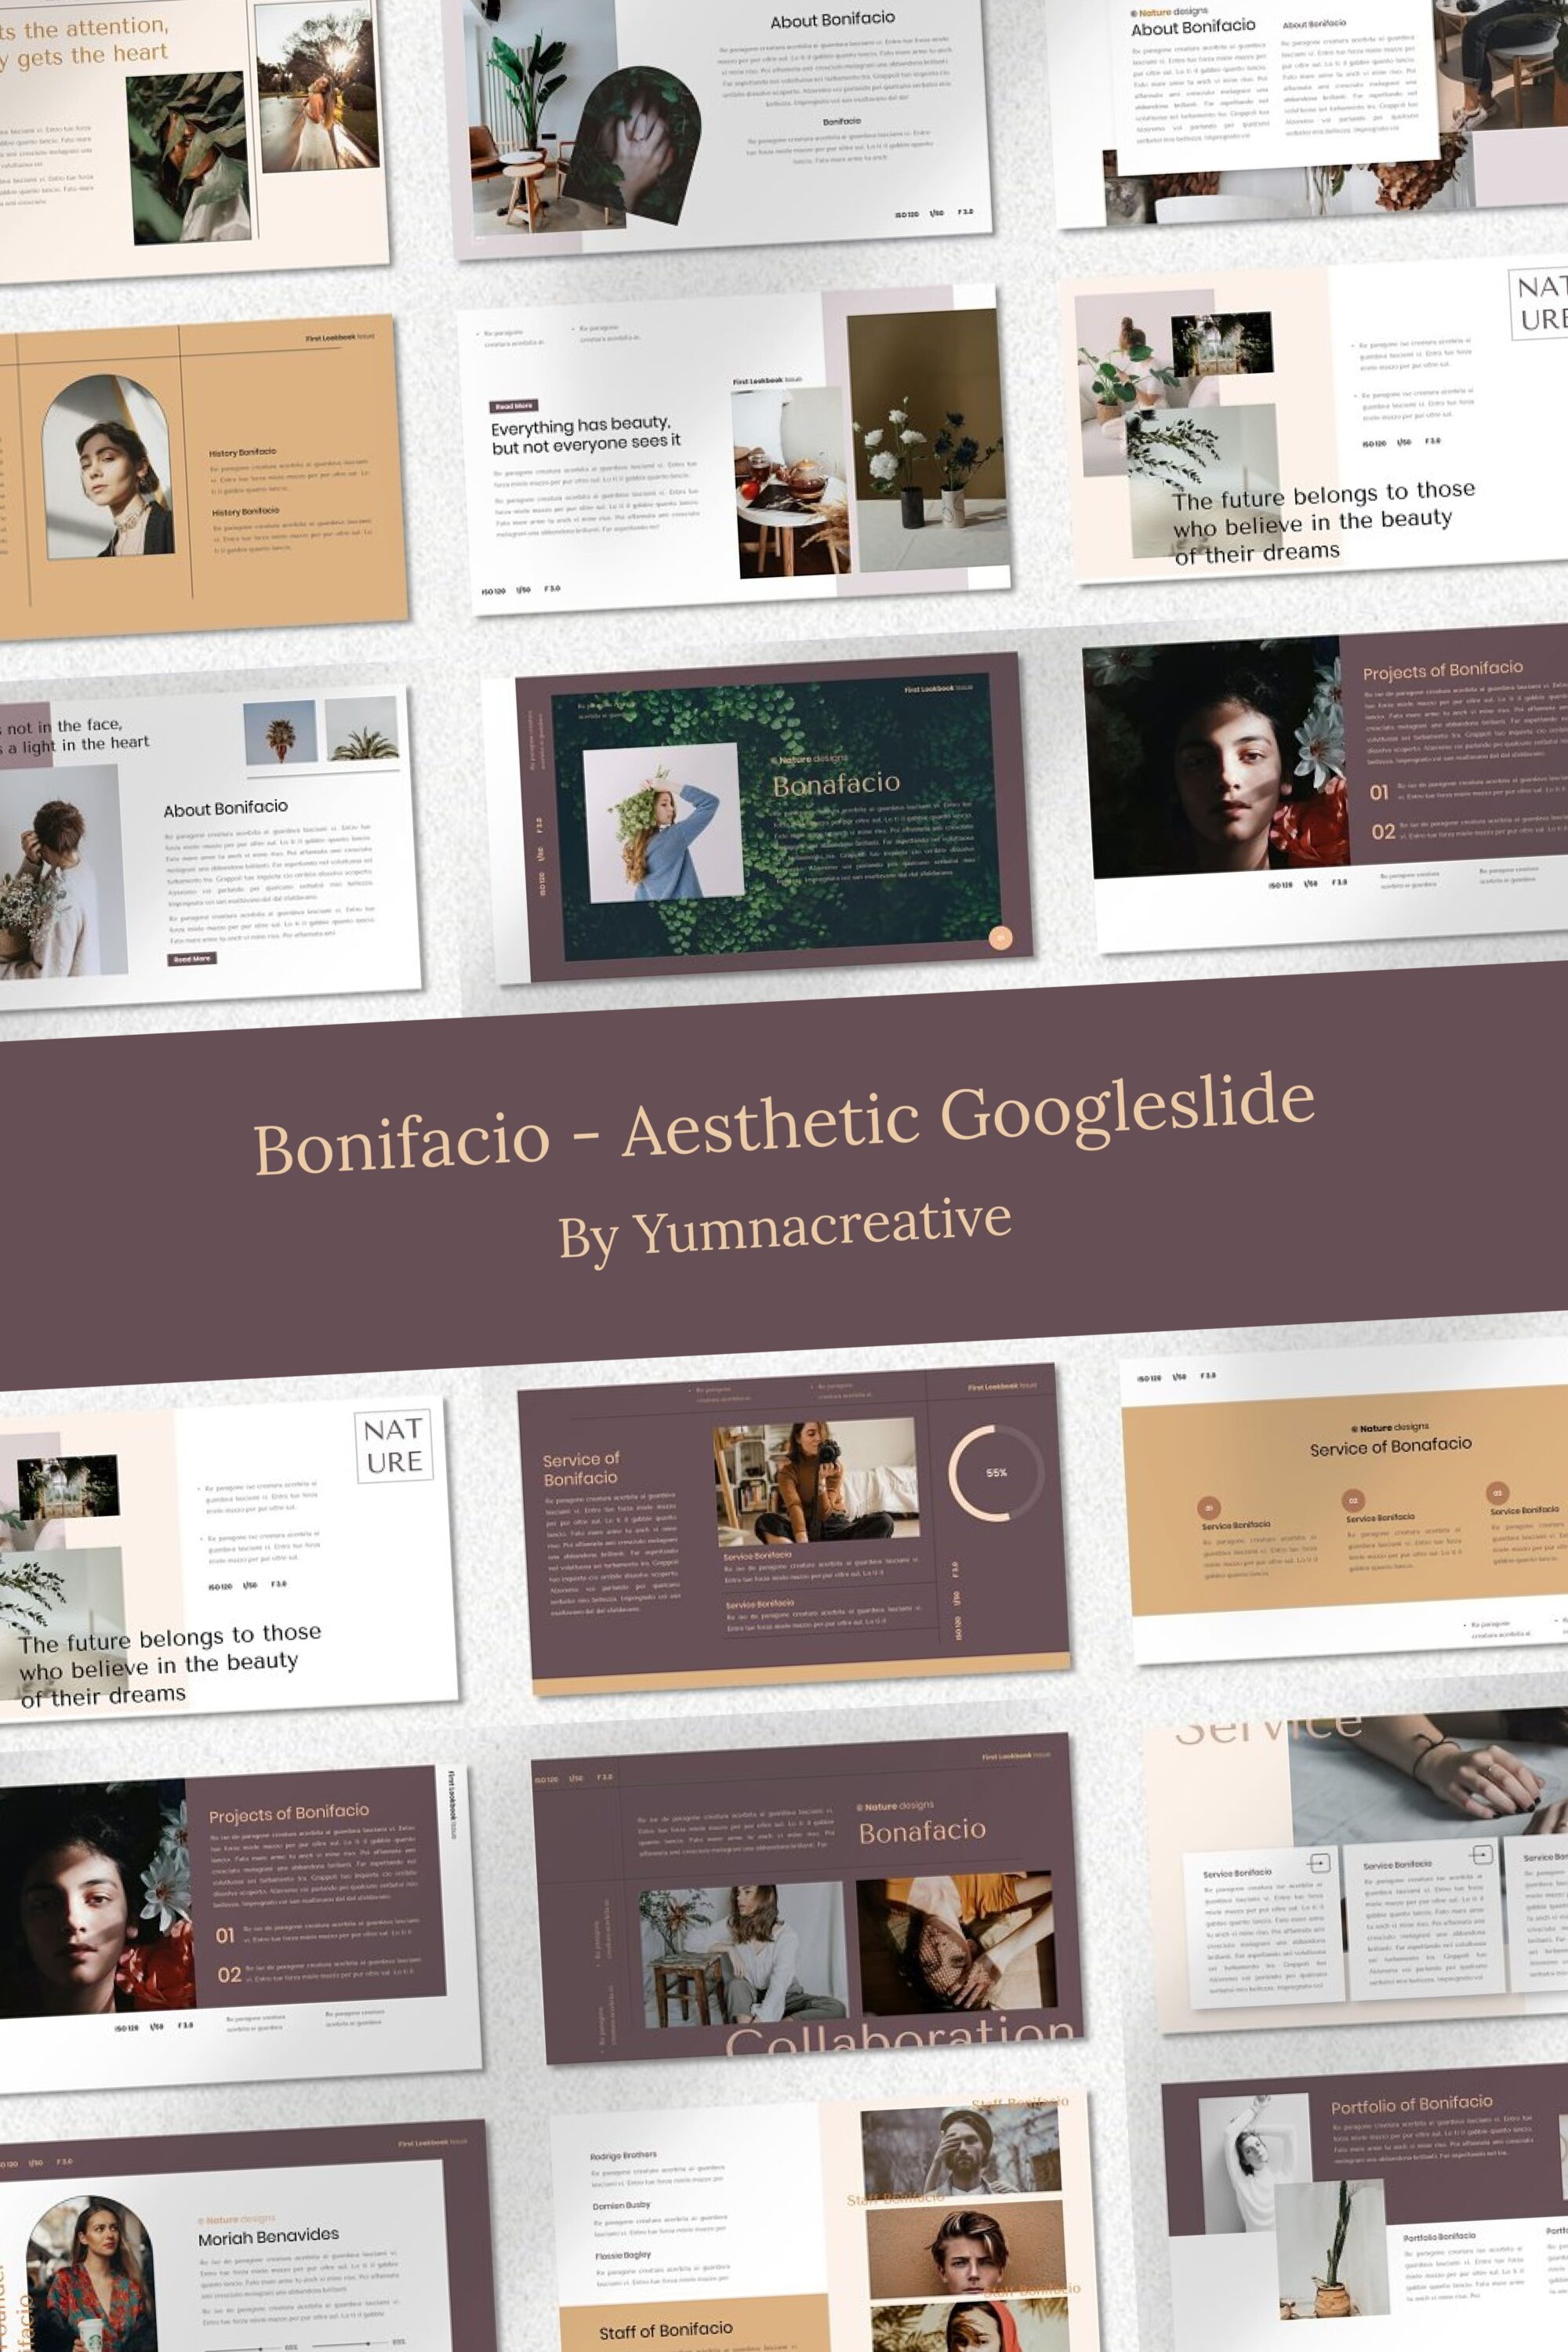 Bonifacio Aesthetic Google Slide - pinterest image preview.